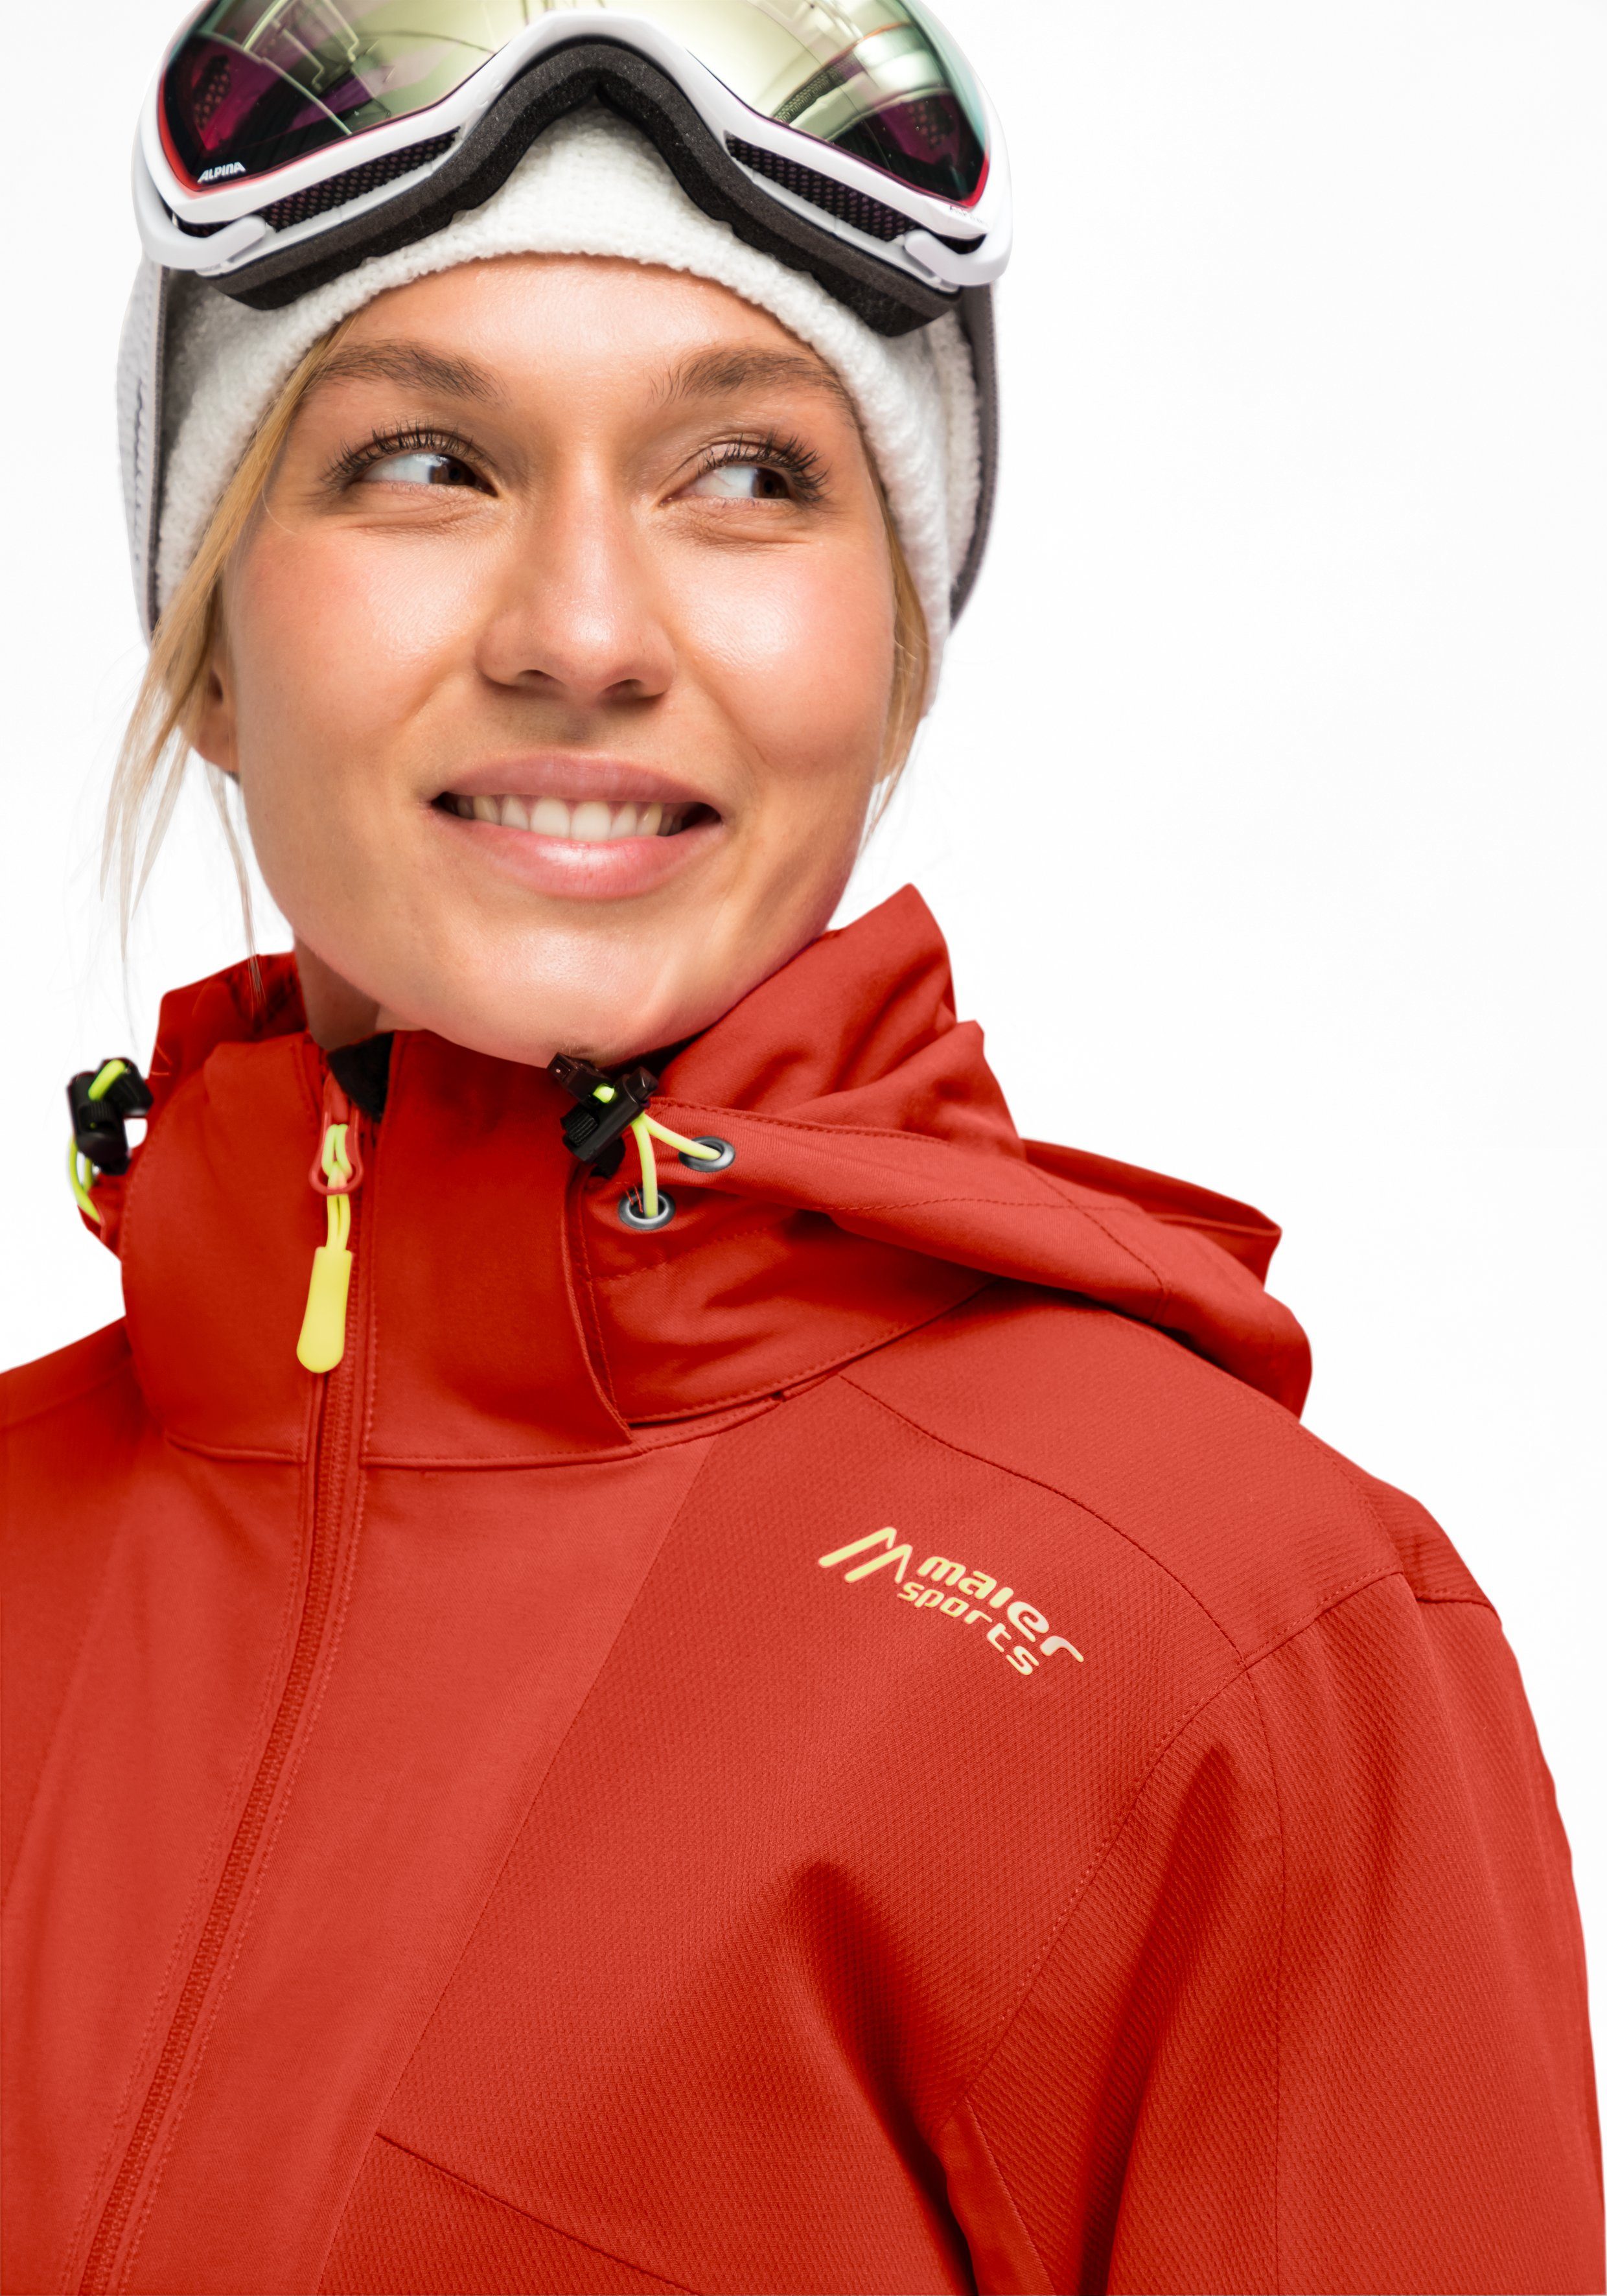 Maier Piste Sports Skijacke und perfekt W designte Modern – orangerot Impulse Freeride Fast für Skijacke